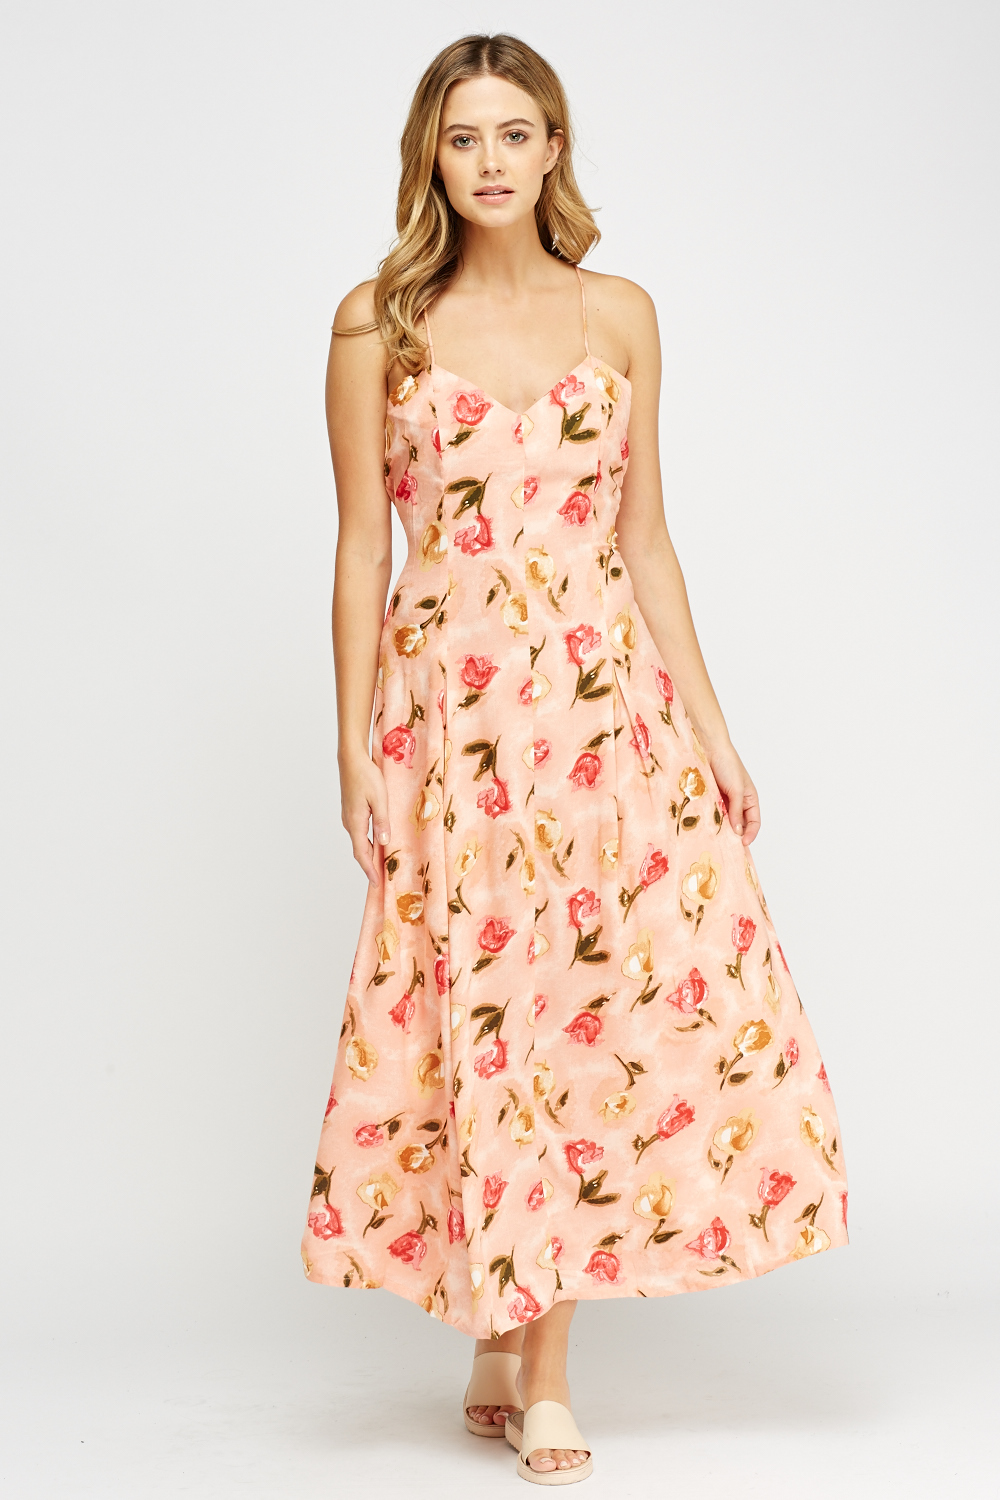 Flower Printed Maxi Dress - Just $6